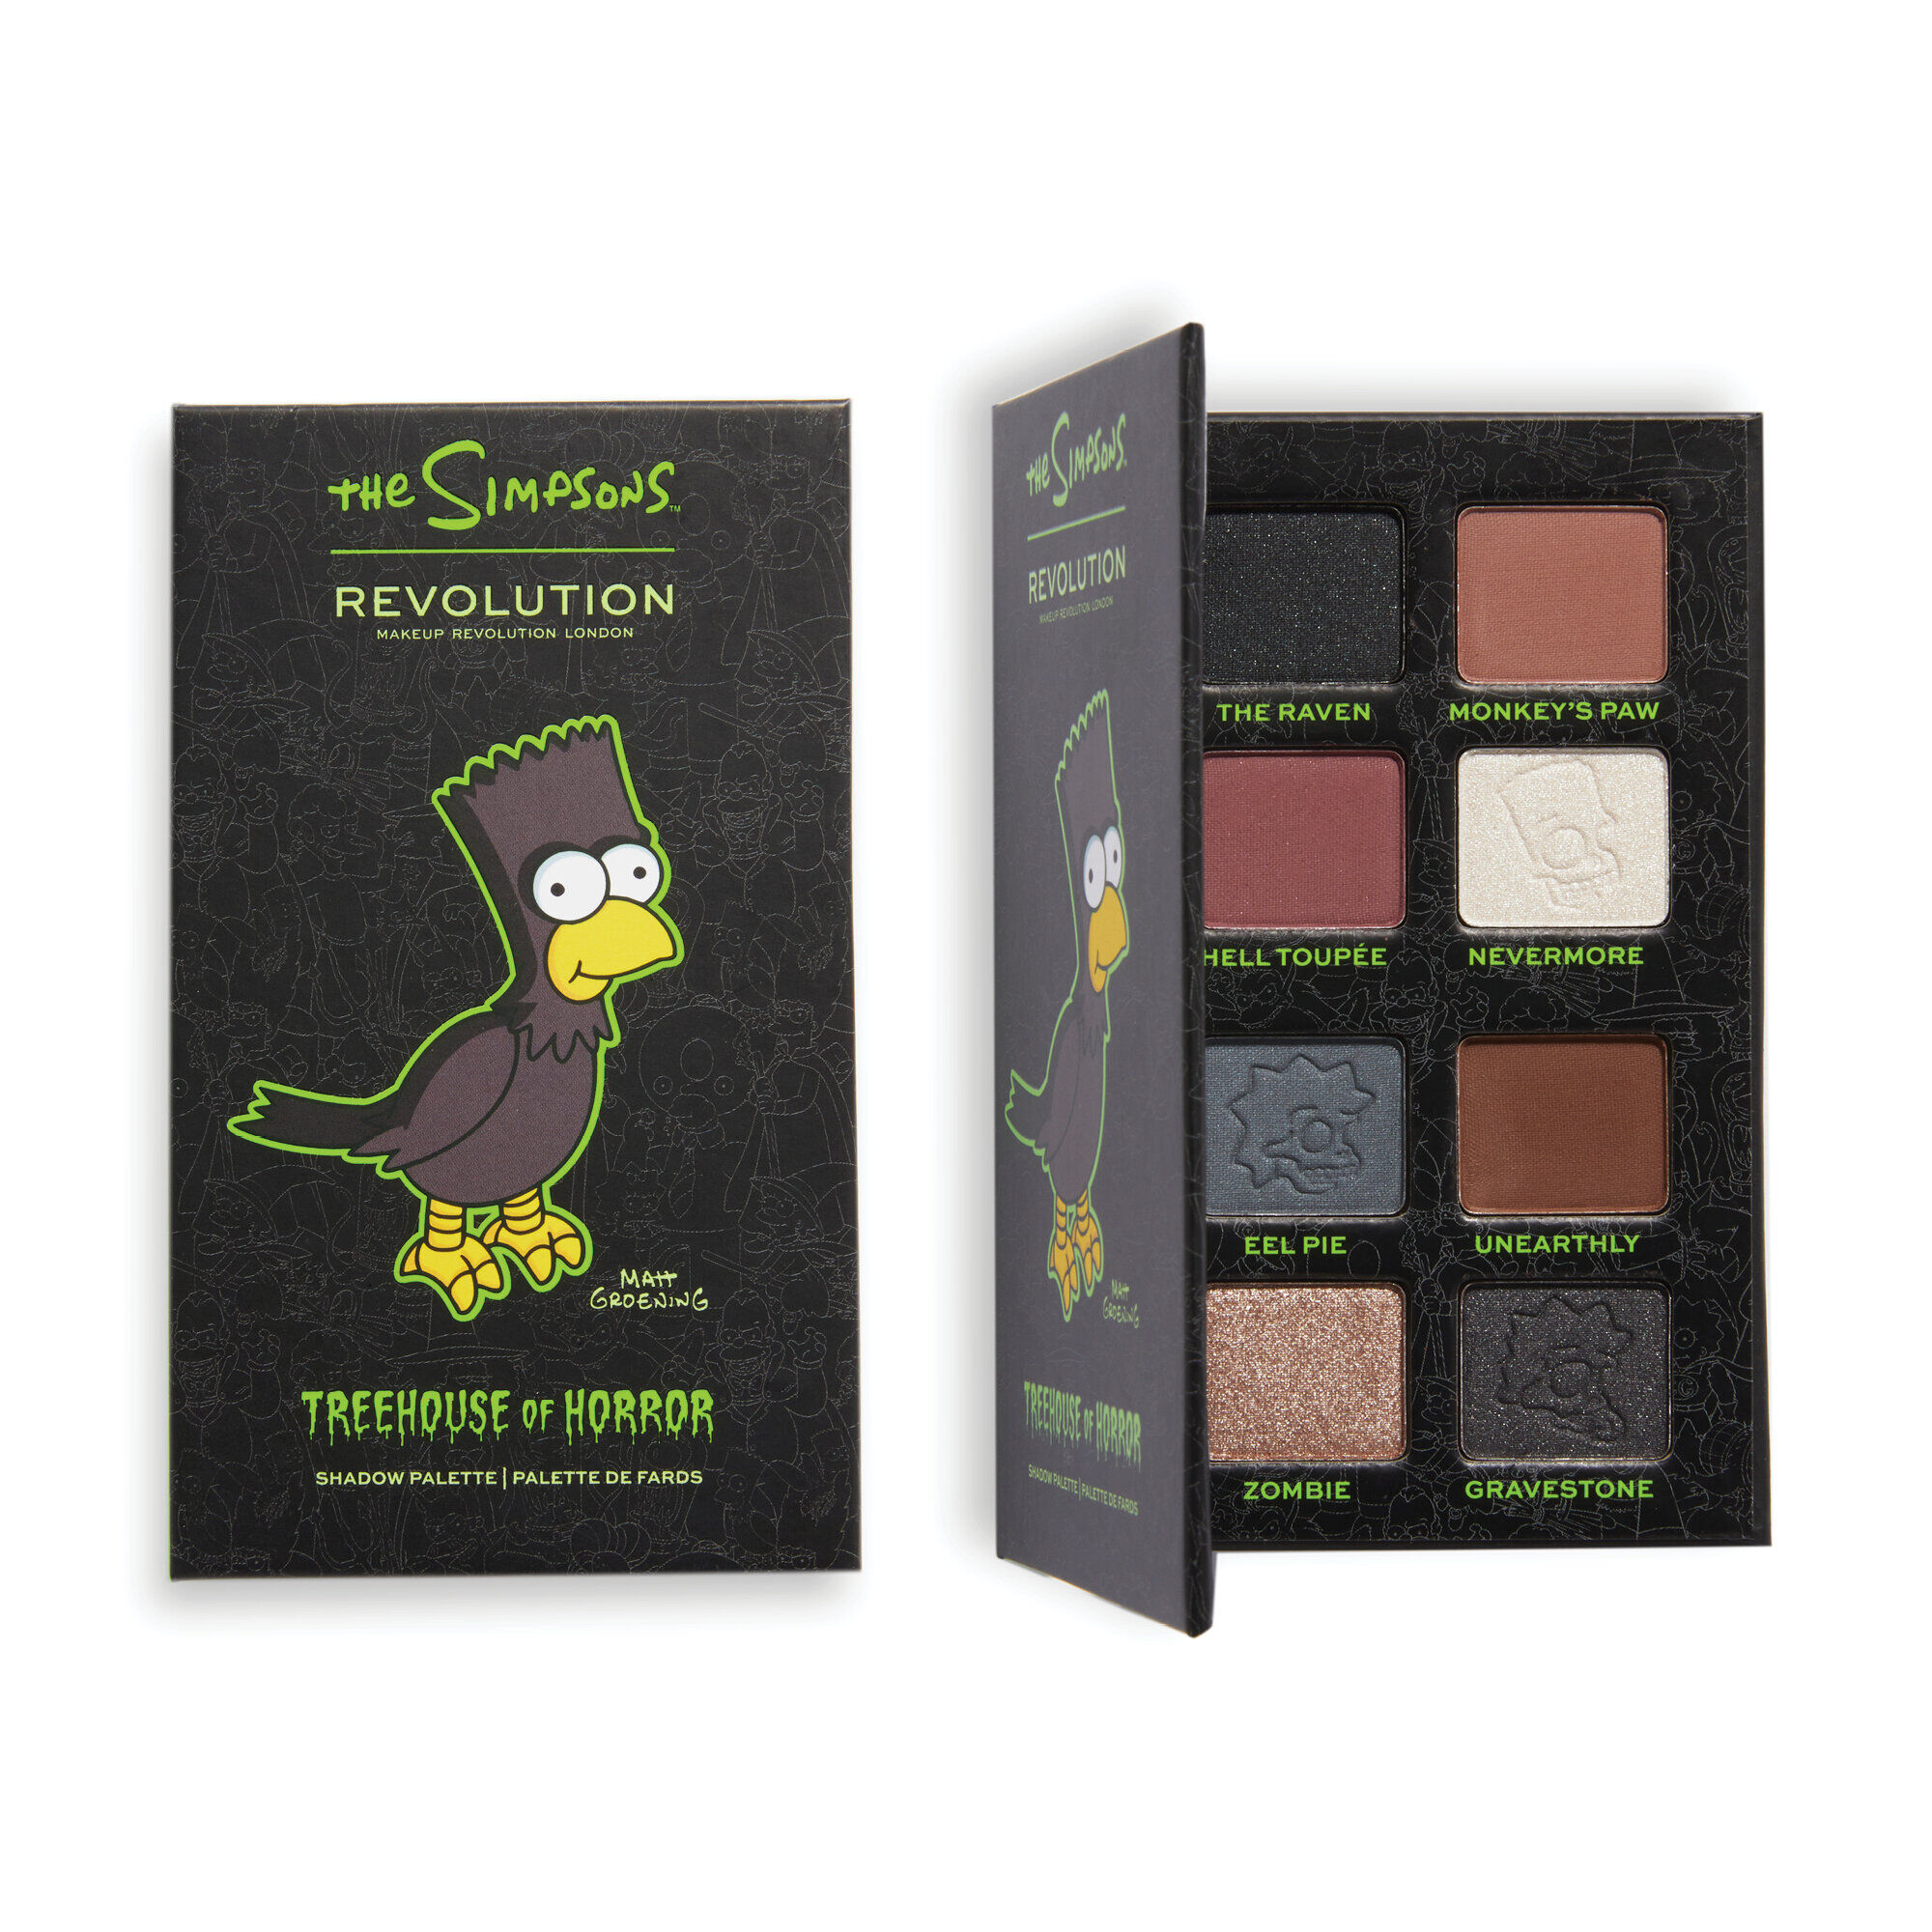 The Simpsons Makeup Revolution Mini Eyeshadow Palette 